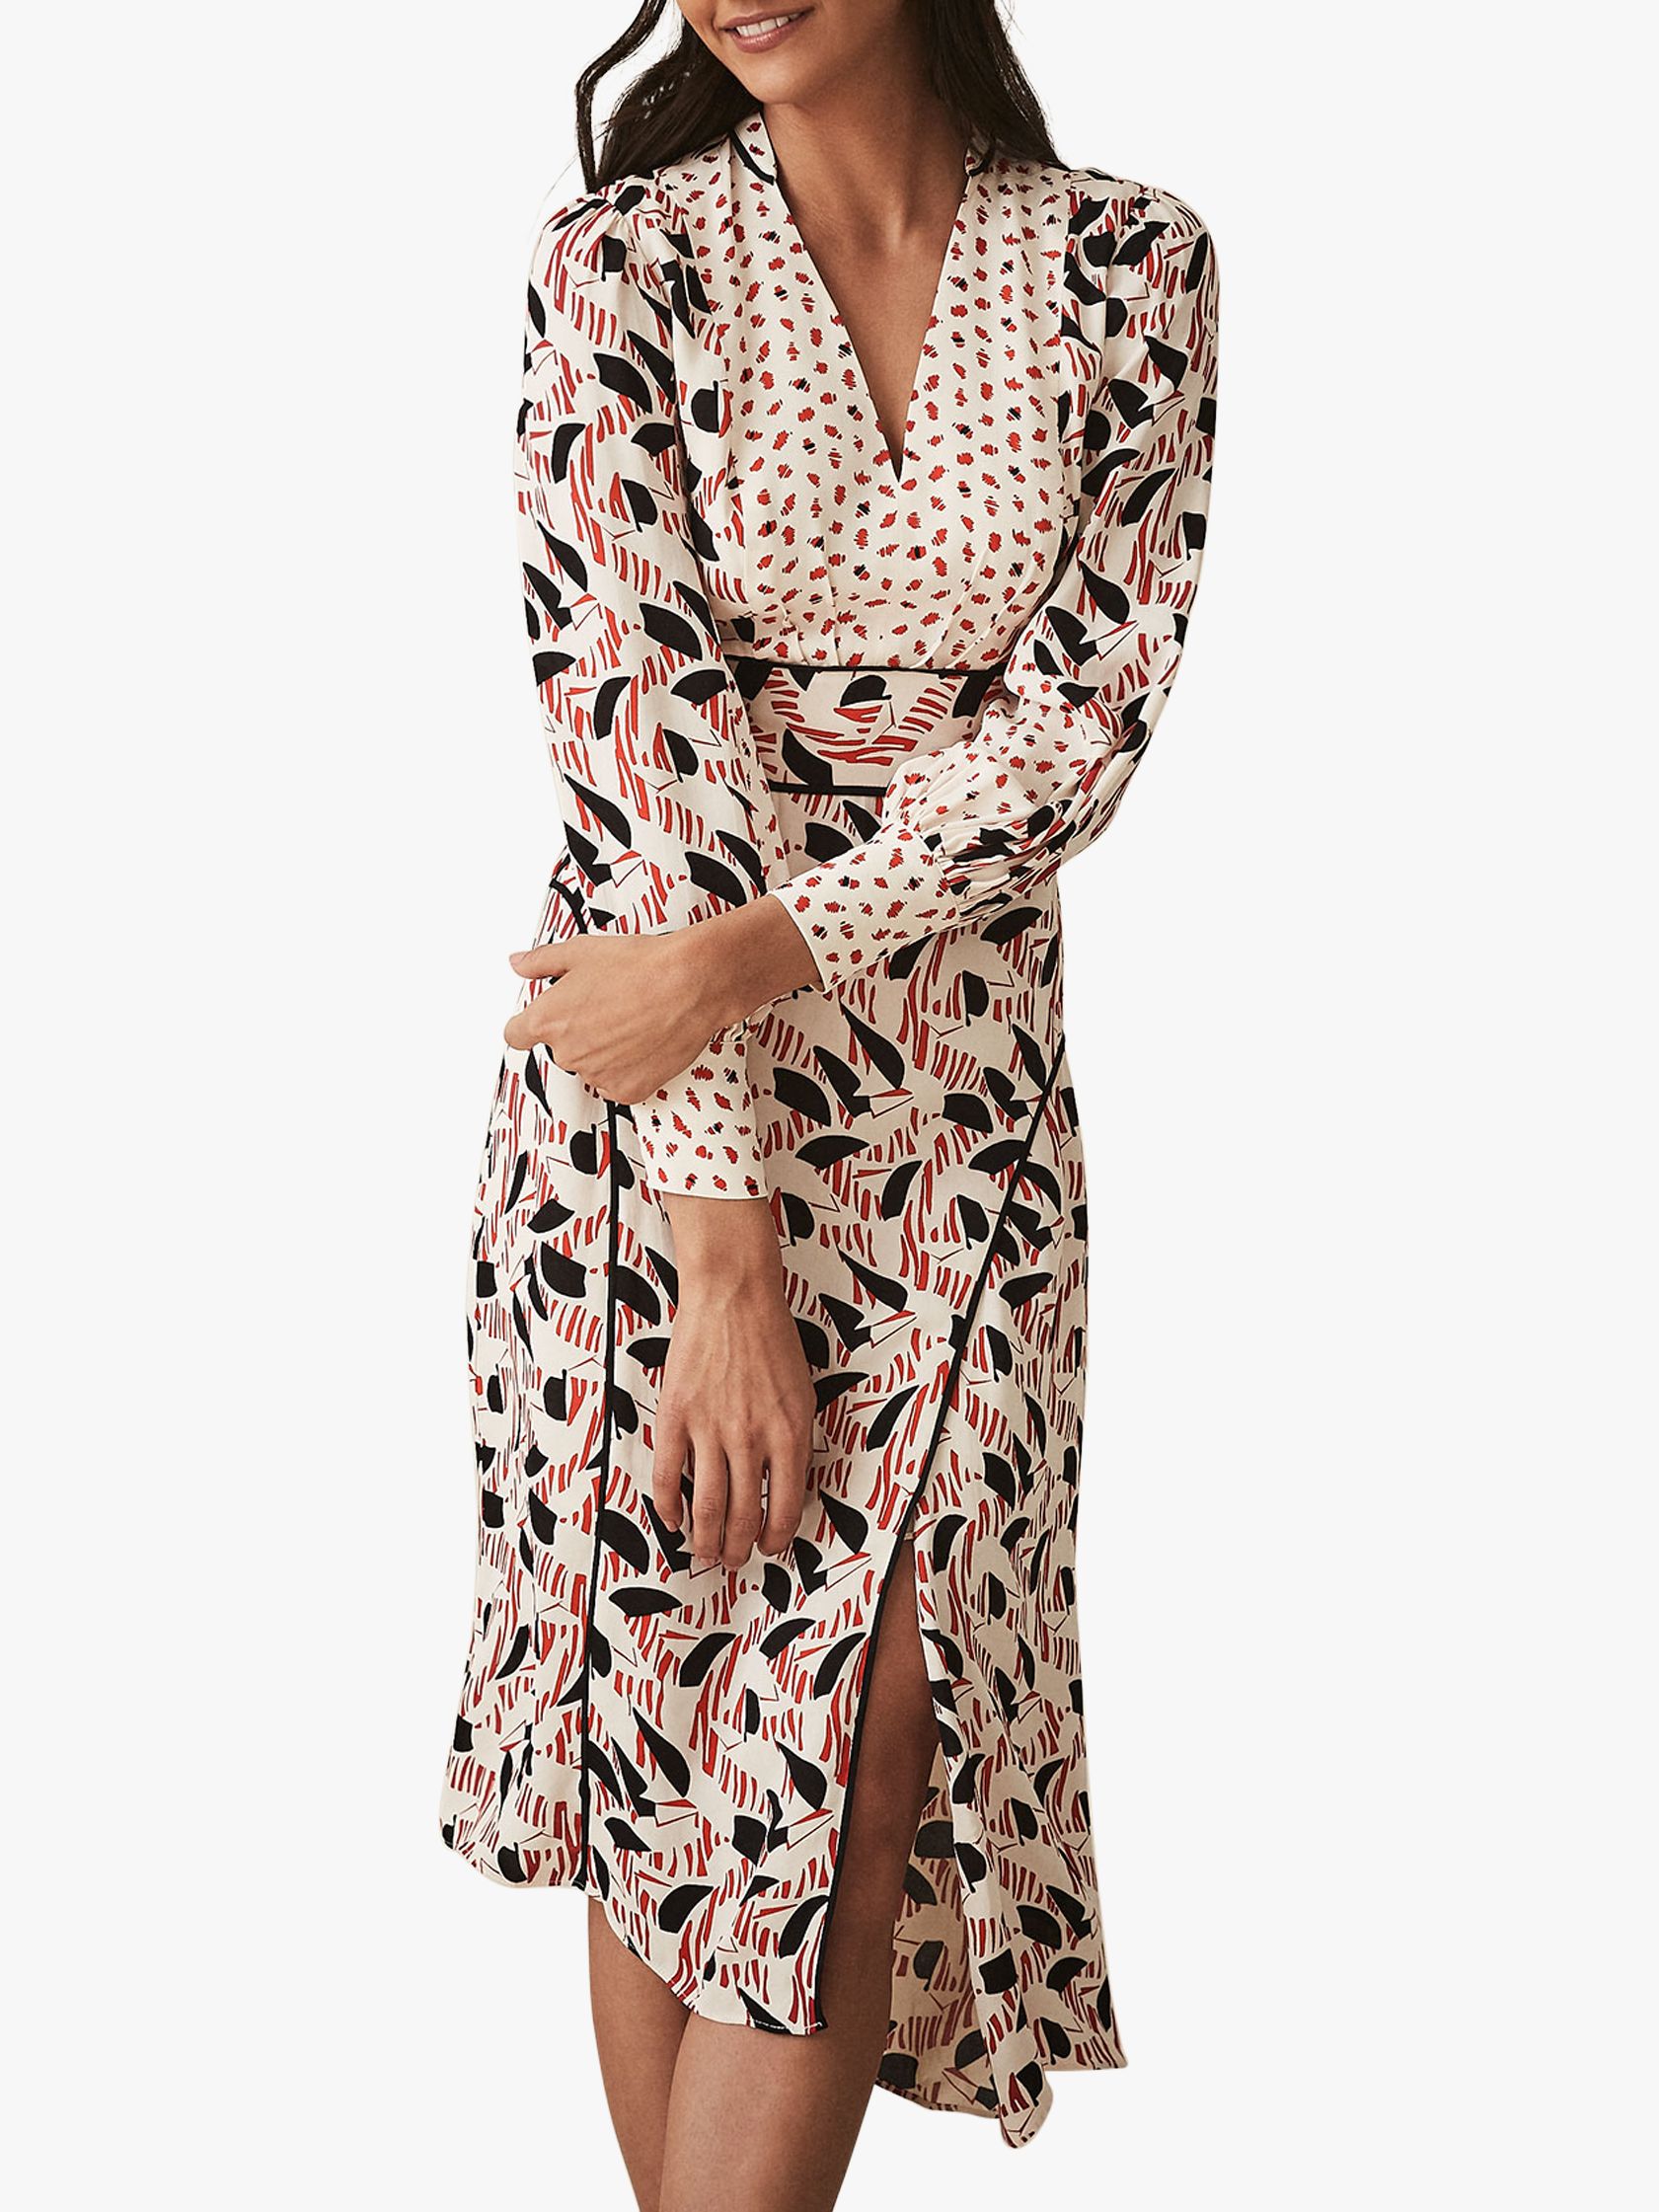 h&m pink sequin dress